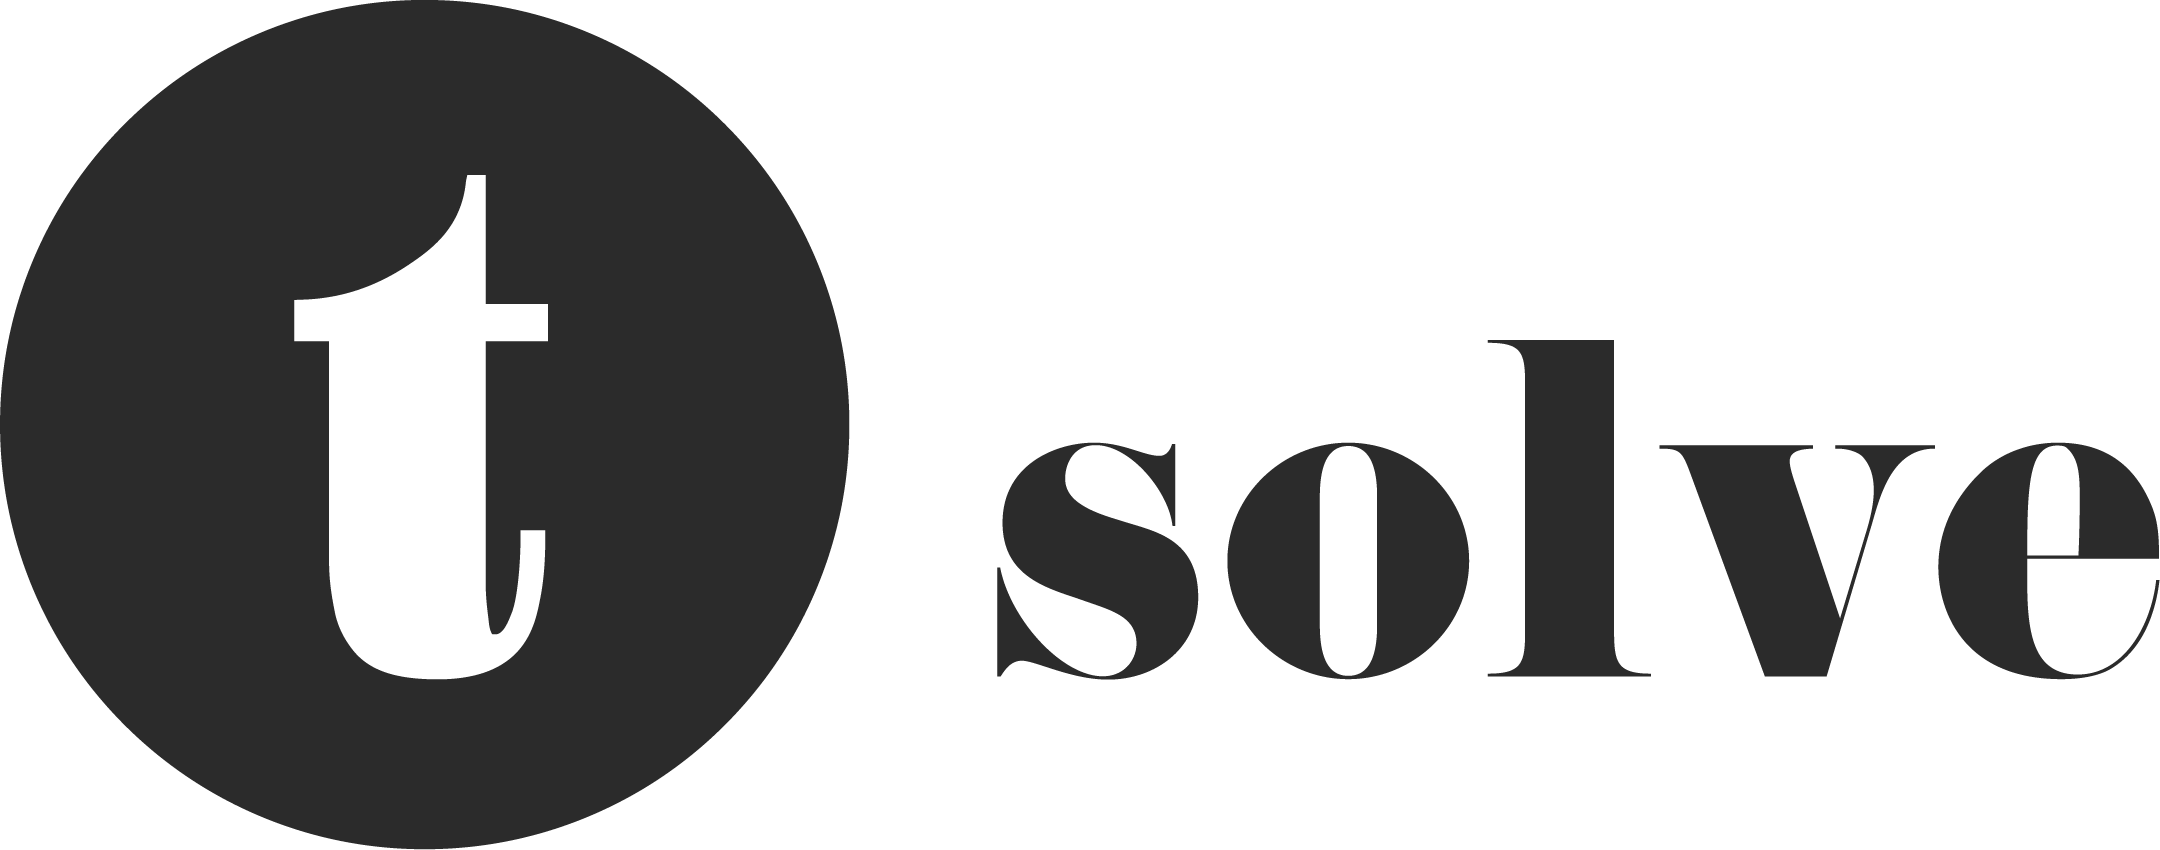 Logos T- Solve negro